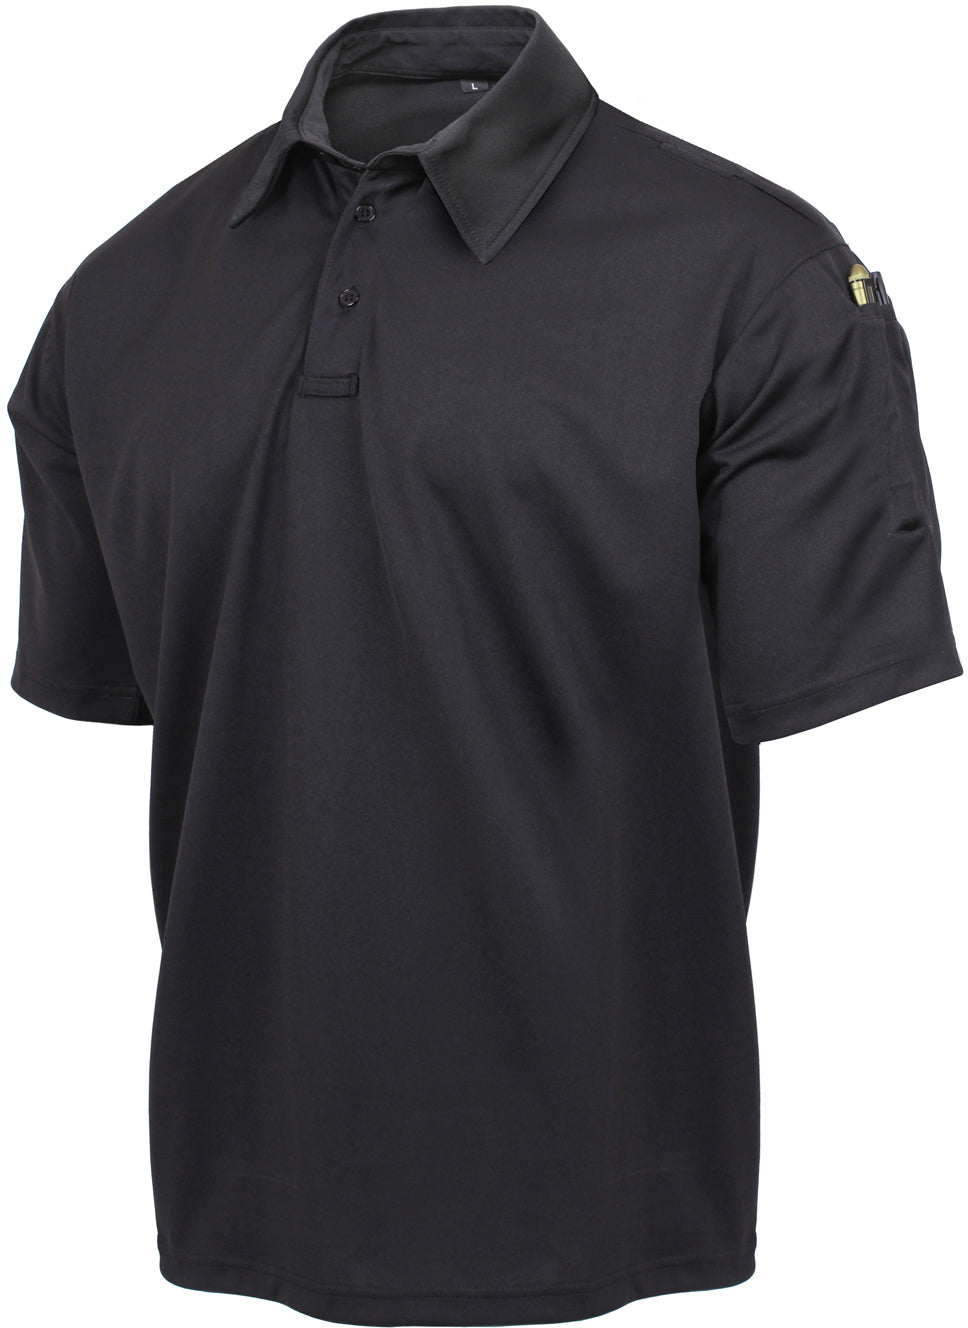 Black - Tactical Performance Polo Shirt